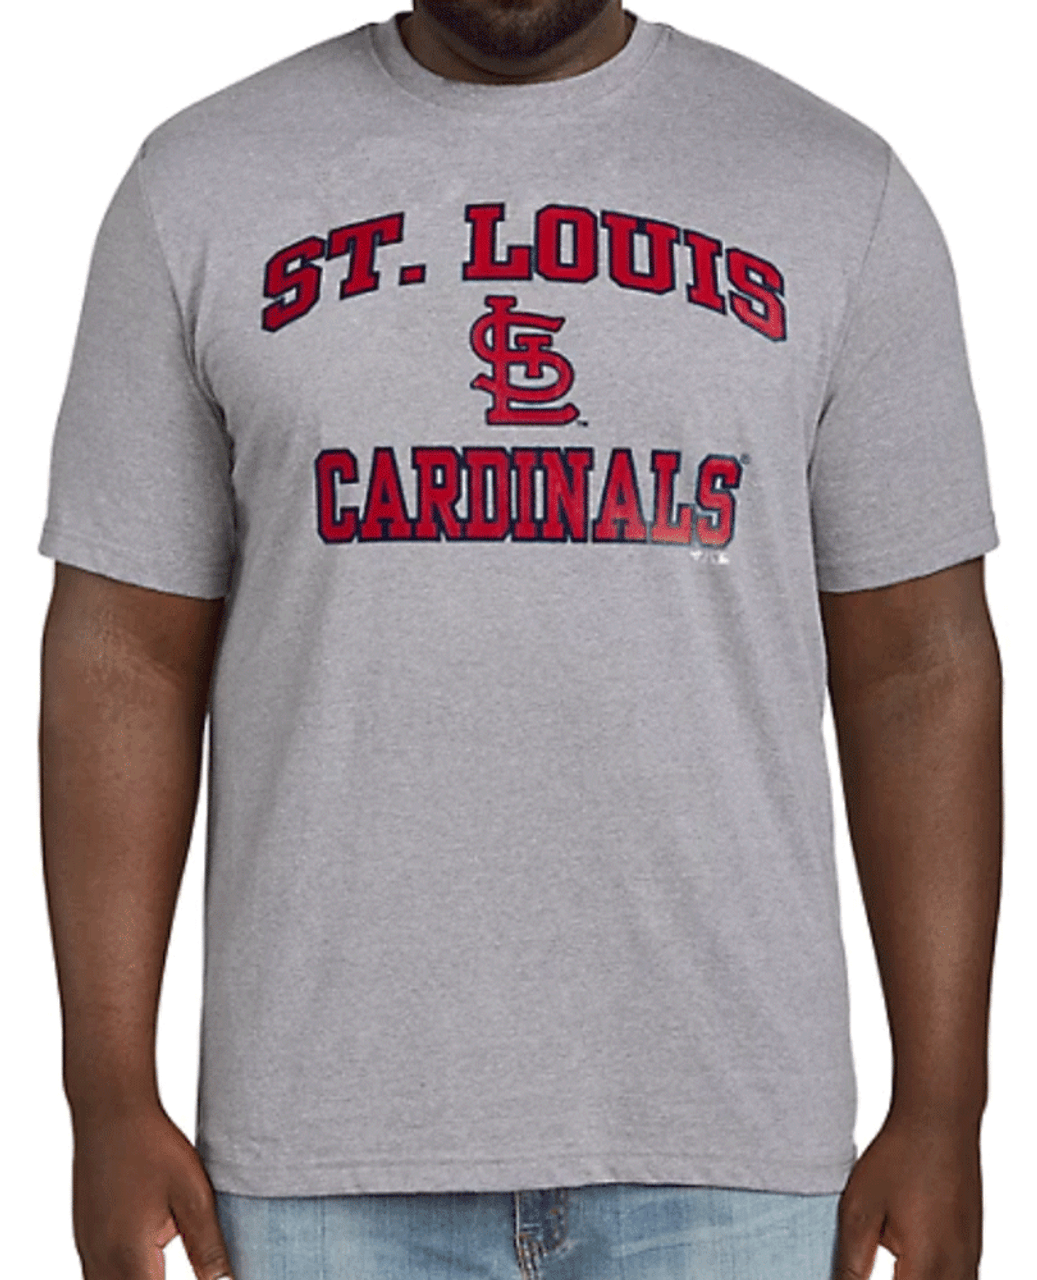 Fanatics MLB Saint Louis Cardinals Heather Gray Short Sleeve Tee Shirt 5XT Black/White/Multi